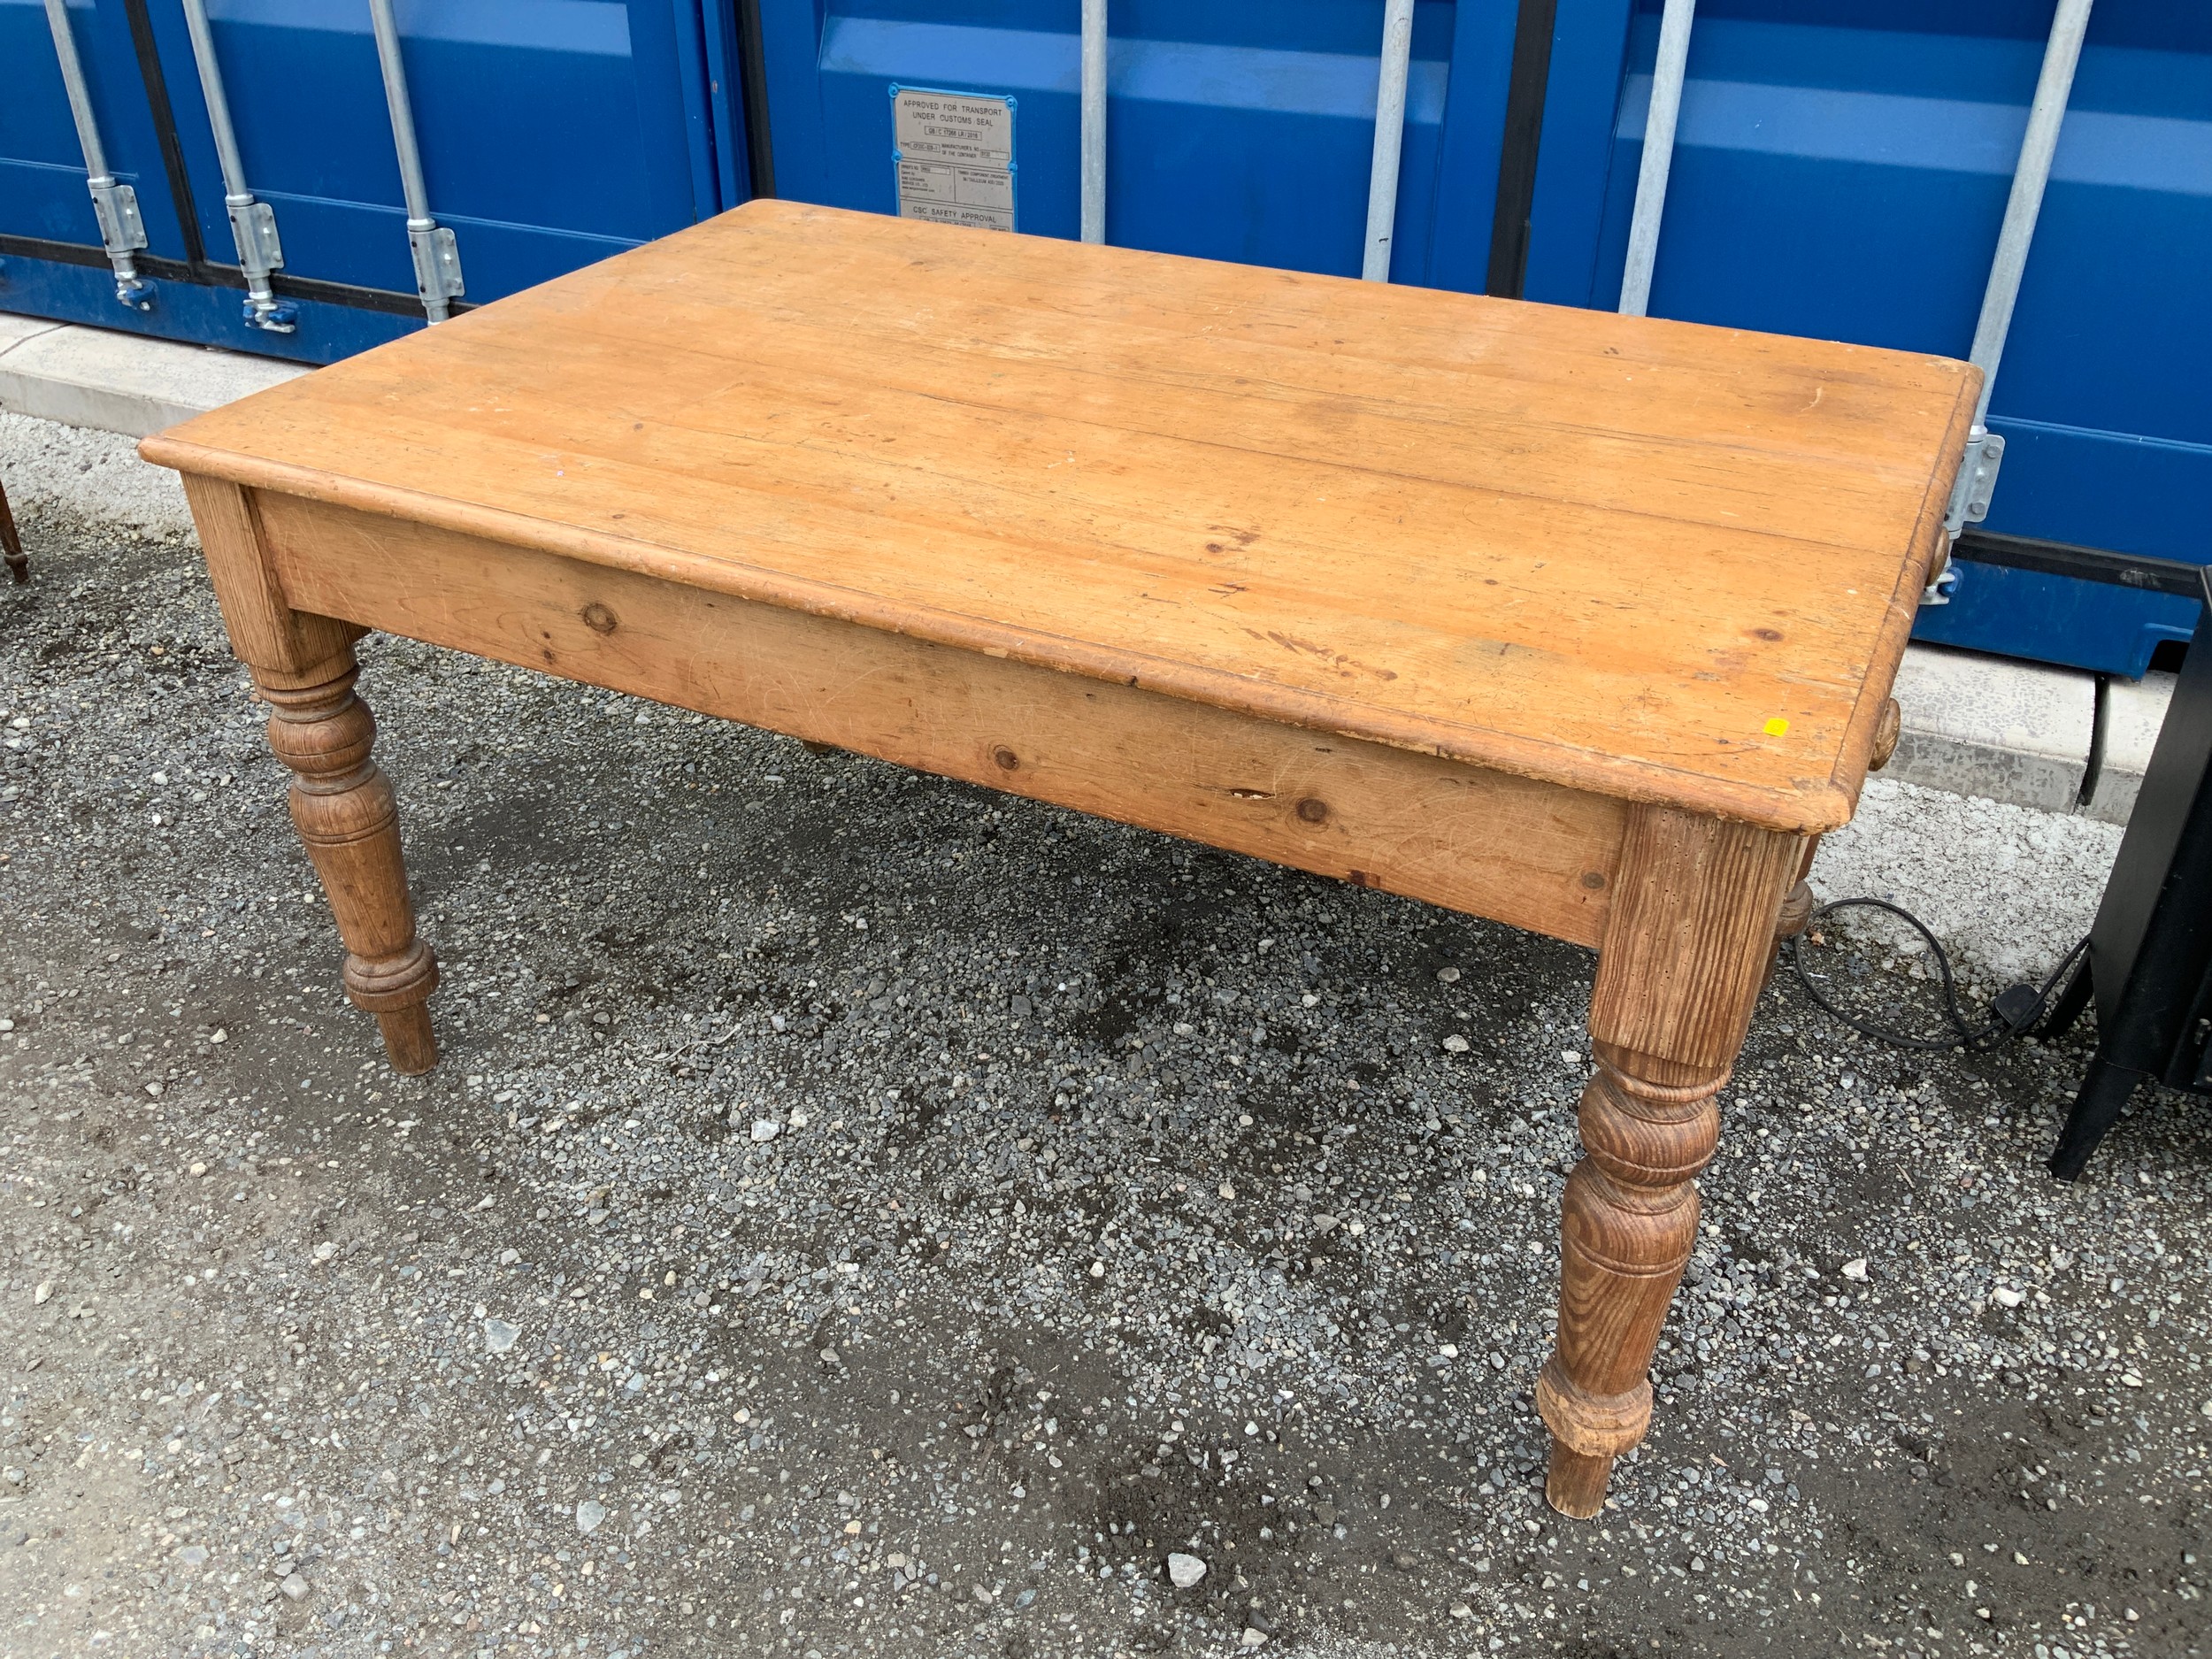 Pine Kitchen Table with Drawer - 146cm W x 95cm D x 74cm H